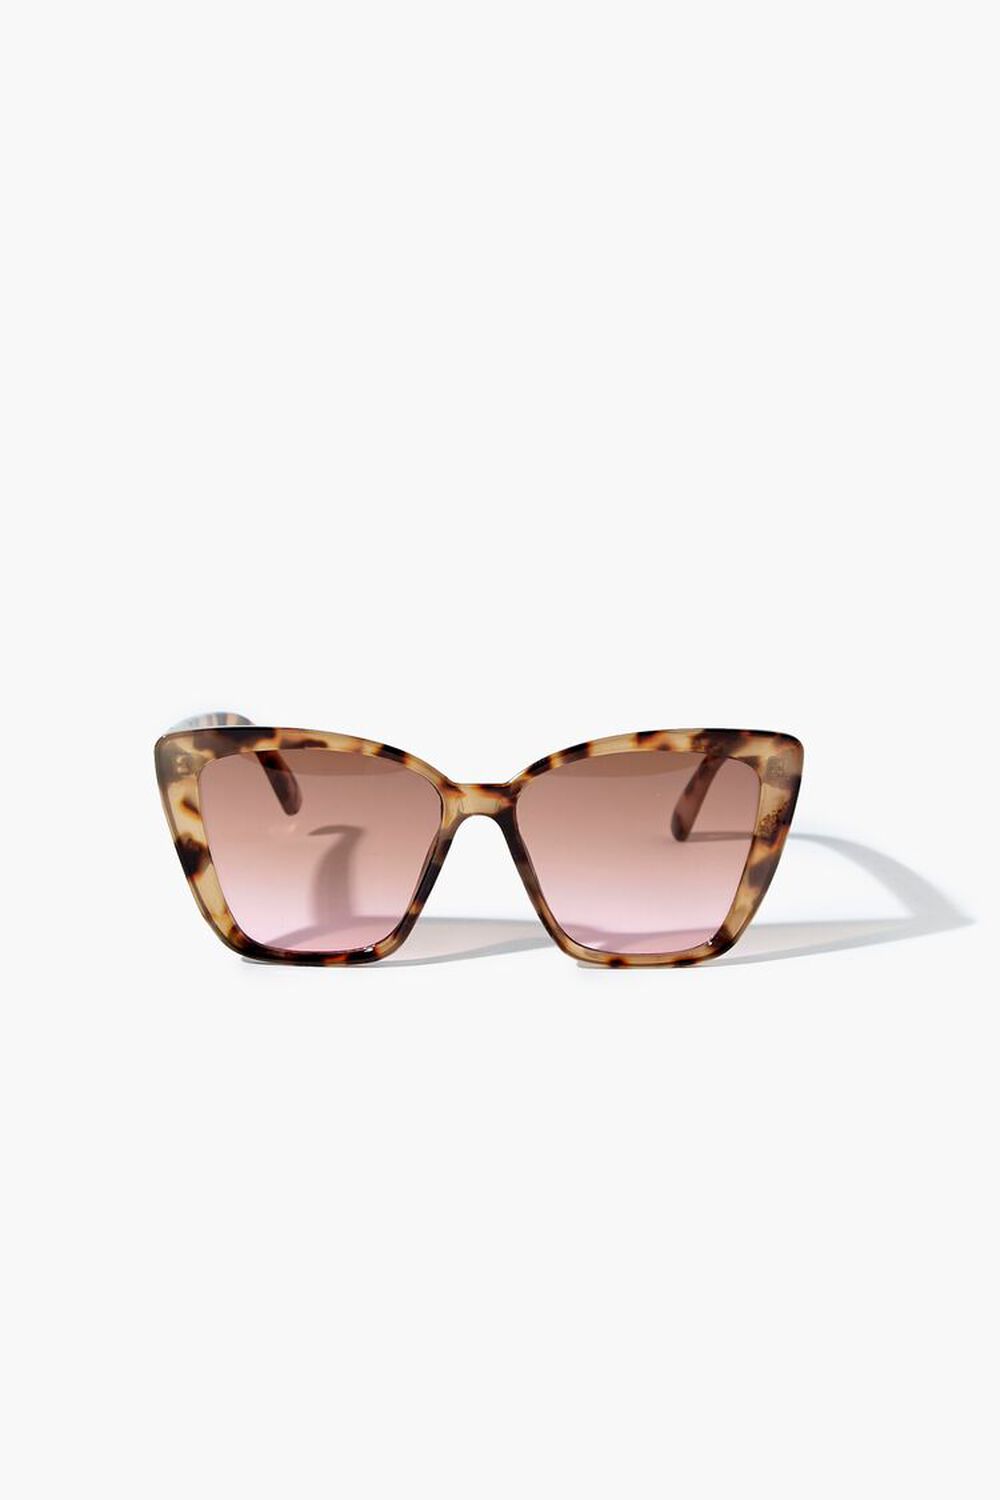 BROWN/PINK Cat-Eye Frame Sunglasses, image 1